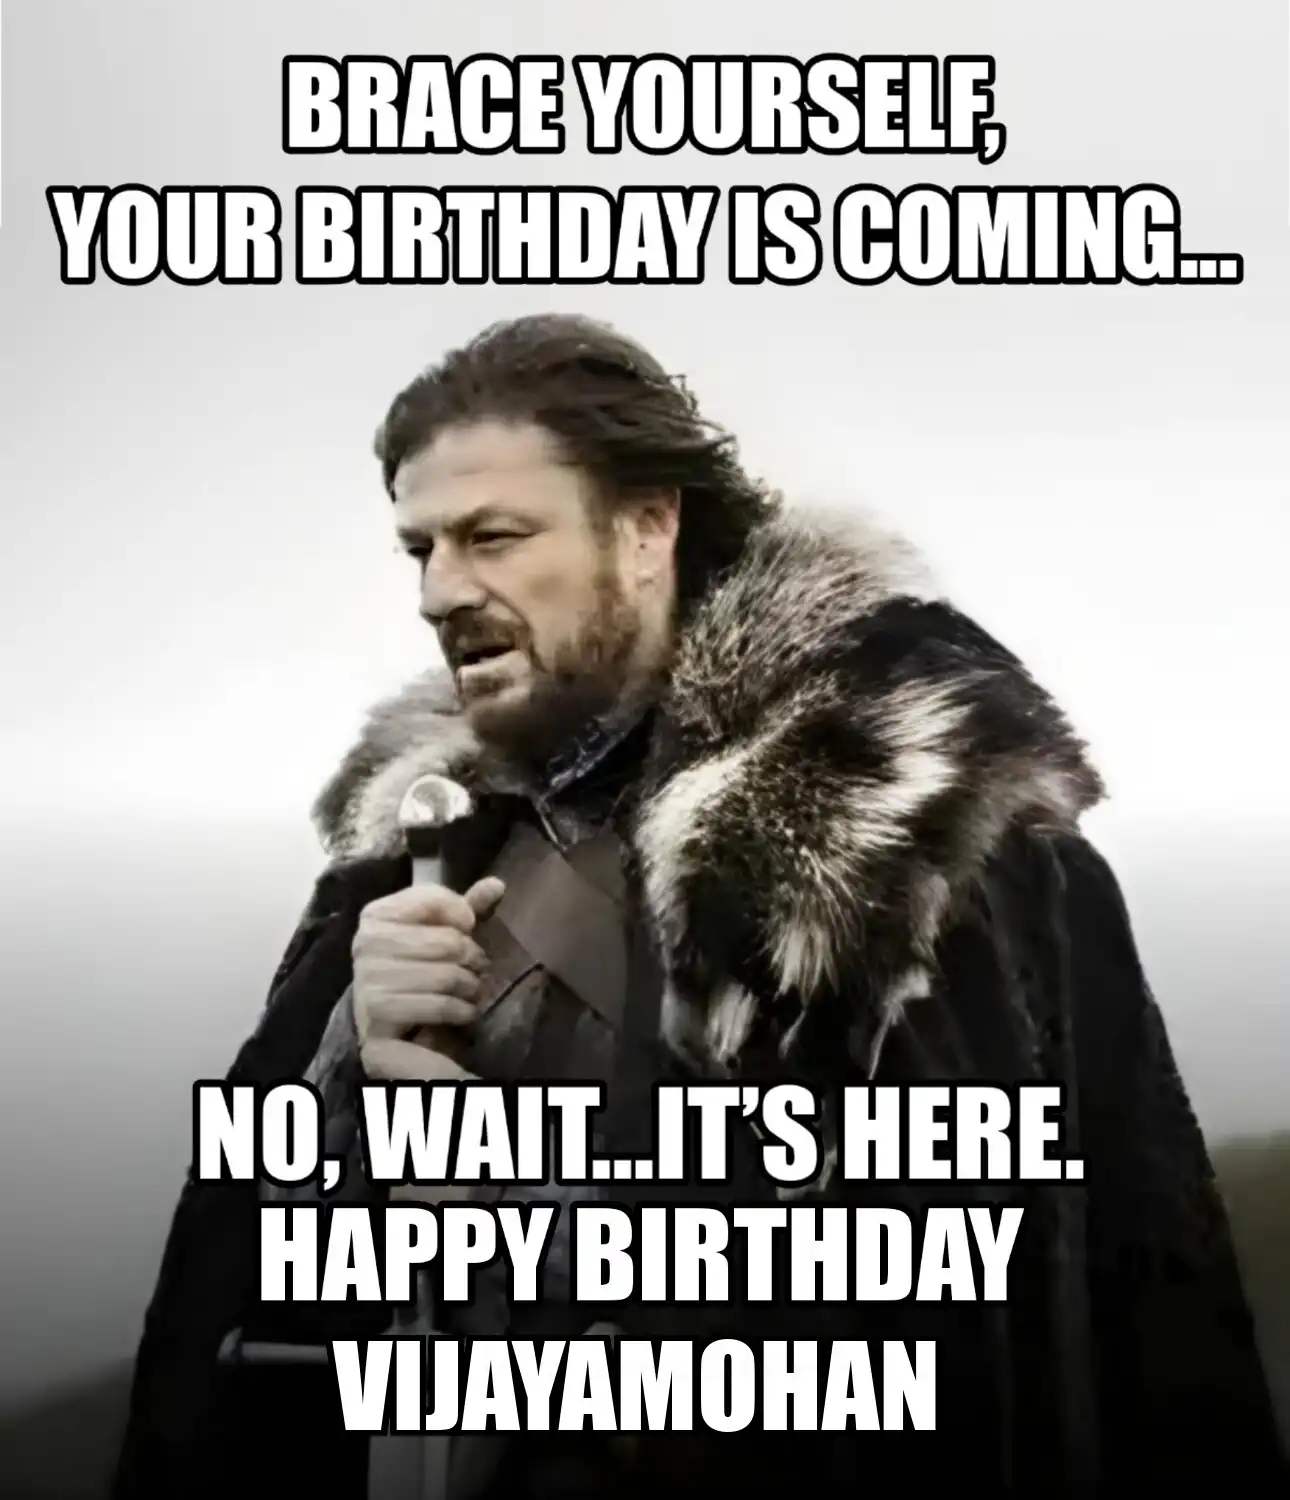 Happy Birthday Vijayamohan Brace Yourself Your Birthday Is Coming Meme